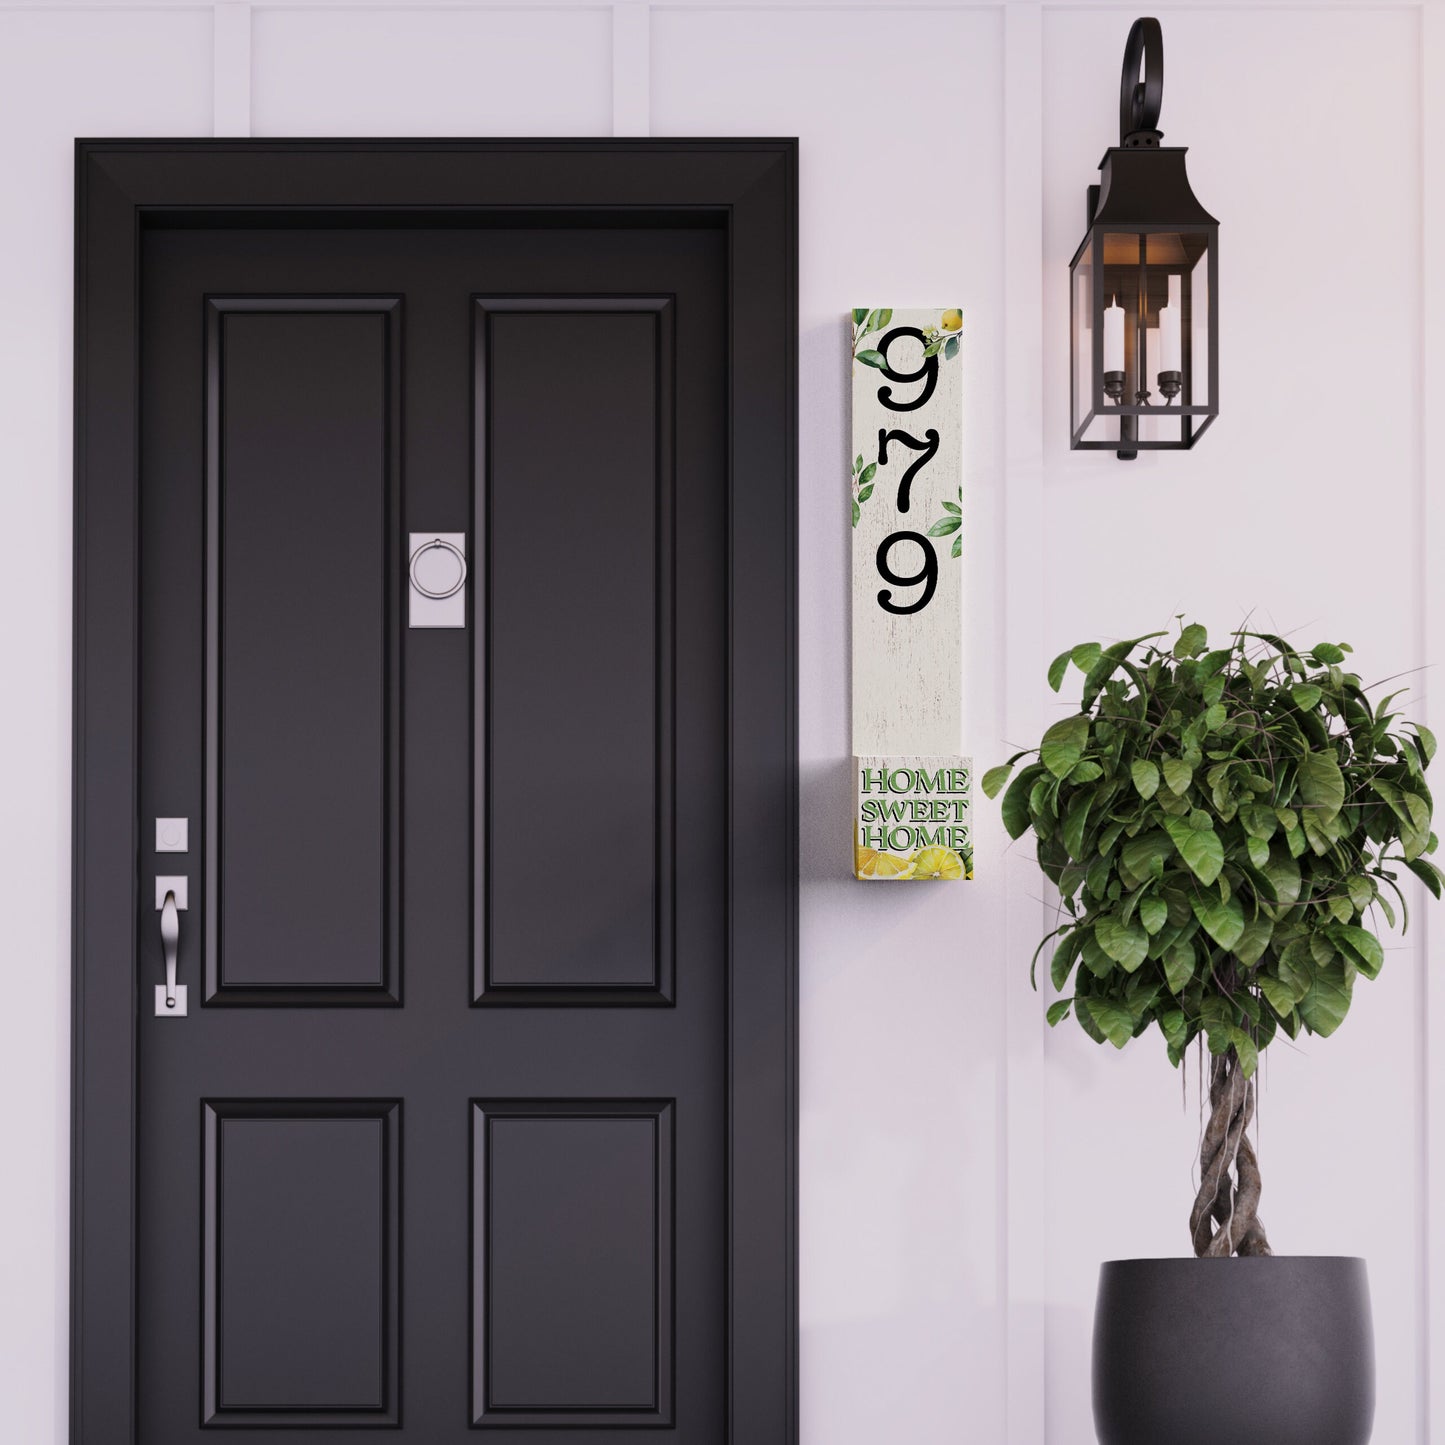 Summer Lemon Wooden Address Number Planter Sign for Front Door - 36"x4.375"x7" - Refreshing Outdoor Home Decor